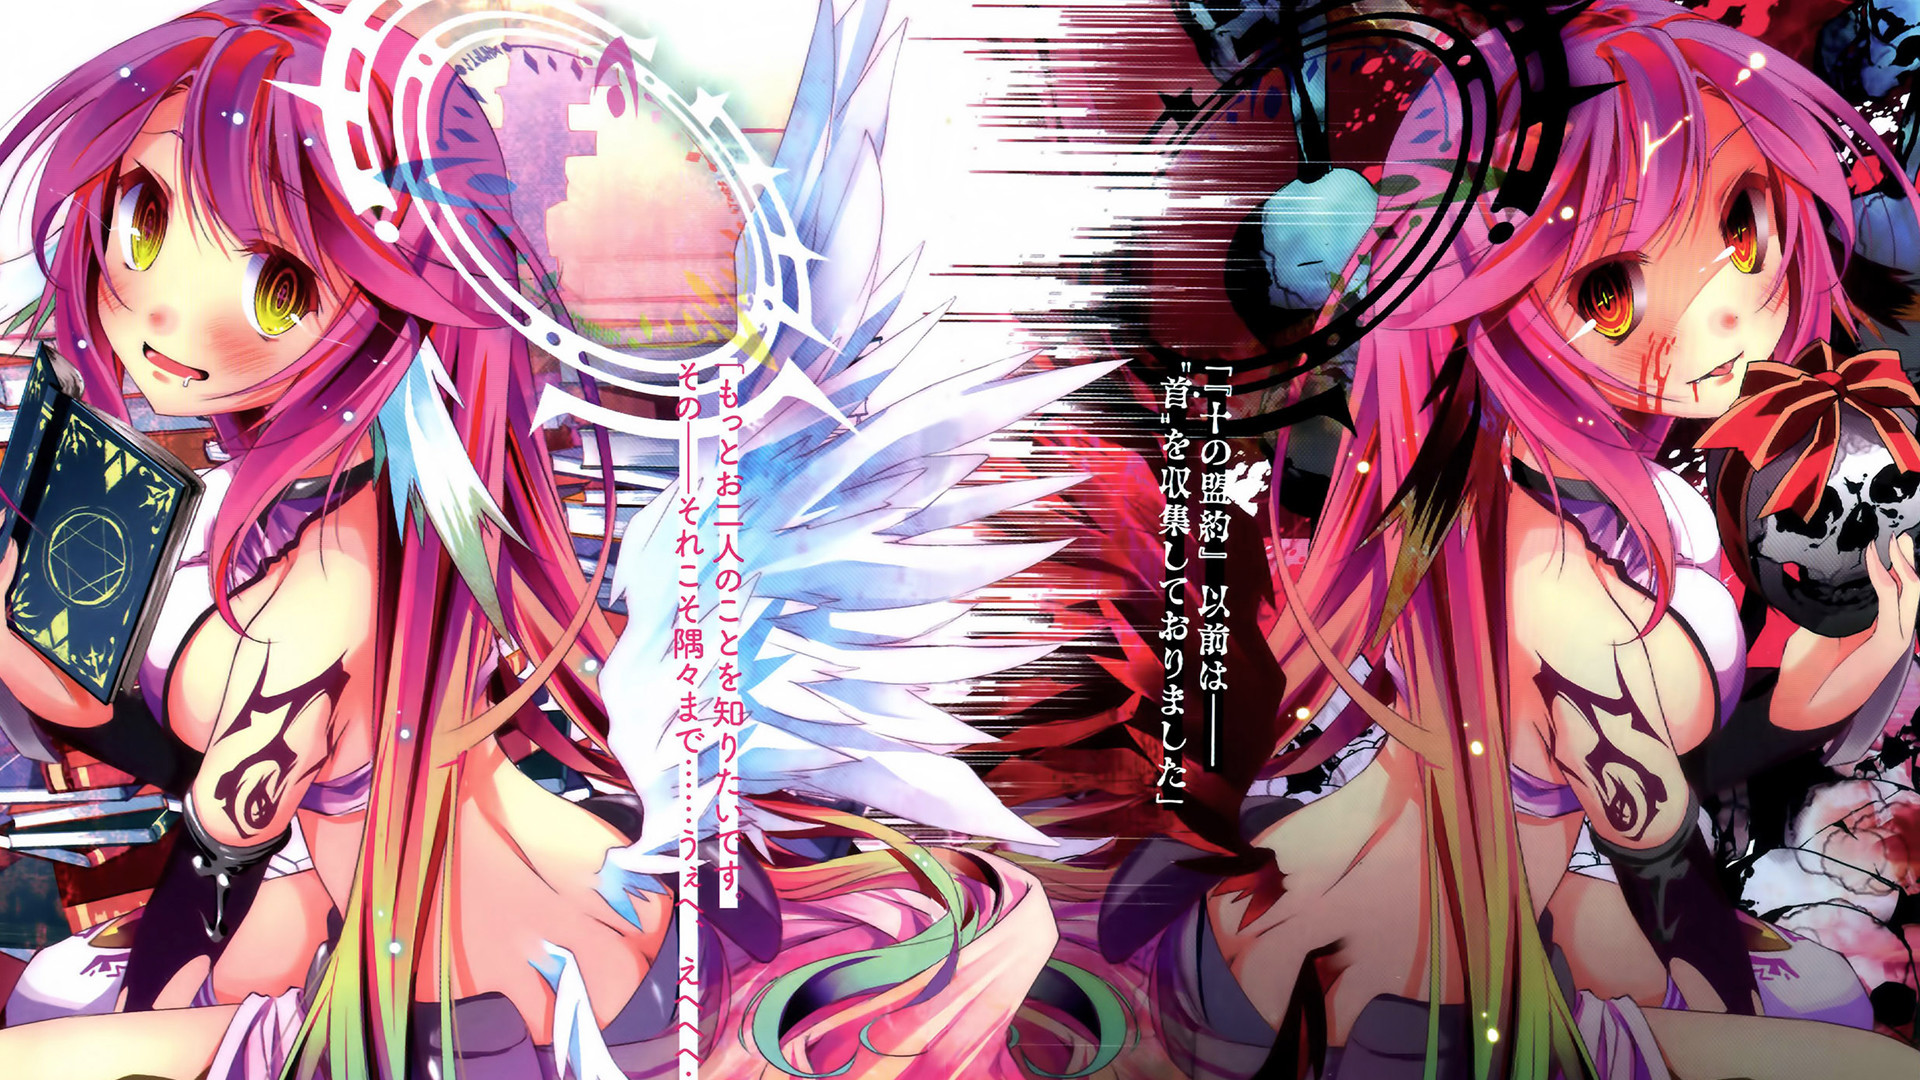 1920x1080 Image for Jibril No Game No Life Anime Girl. Hd 1920X1080 1080P Wallpaper  And